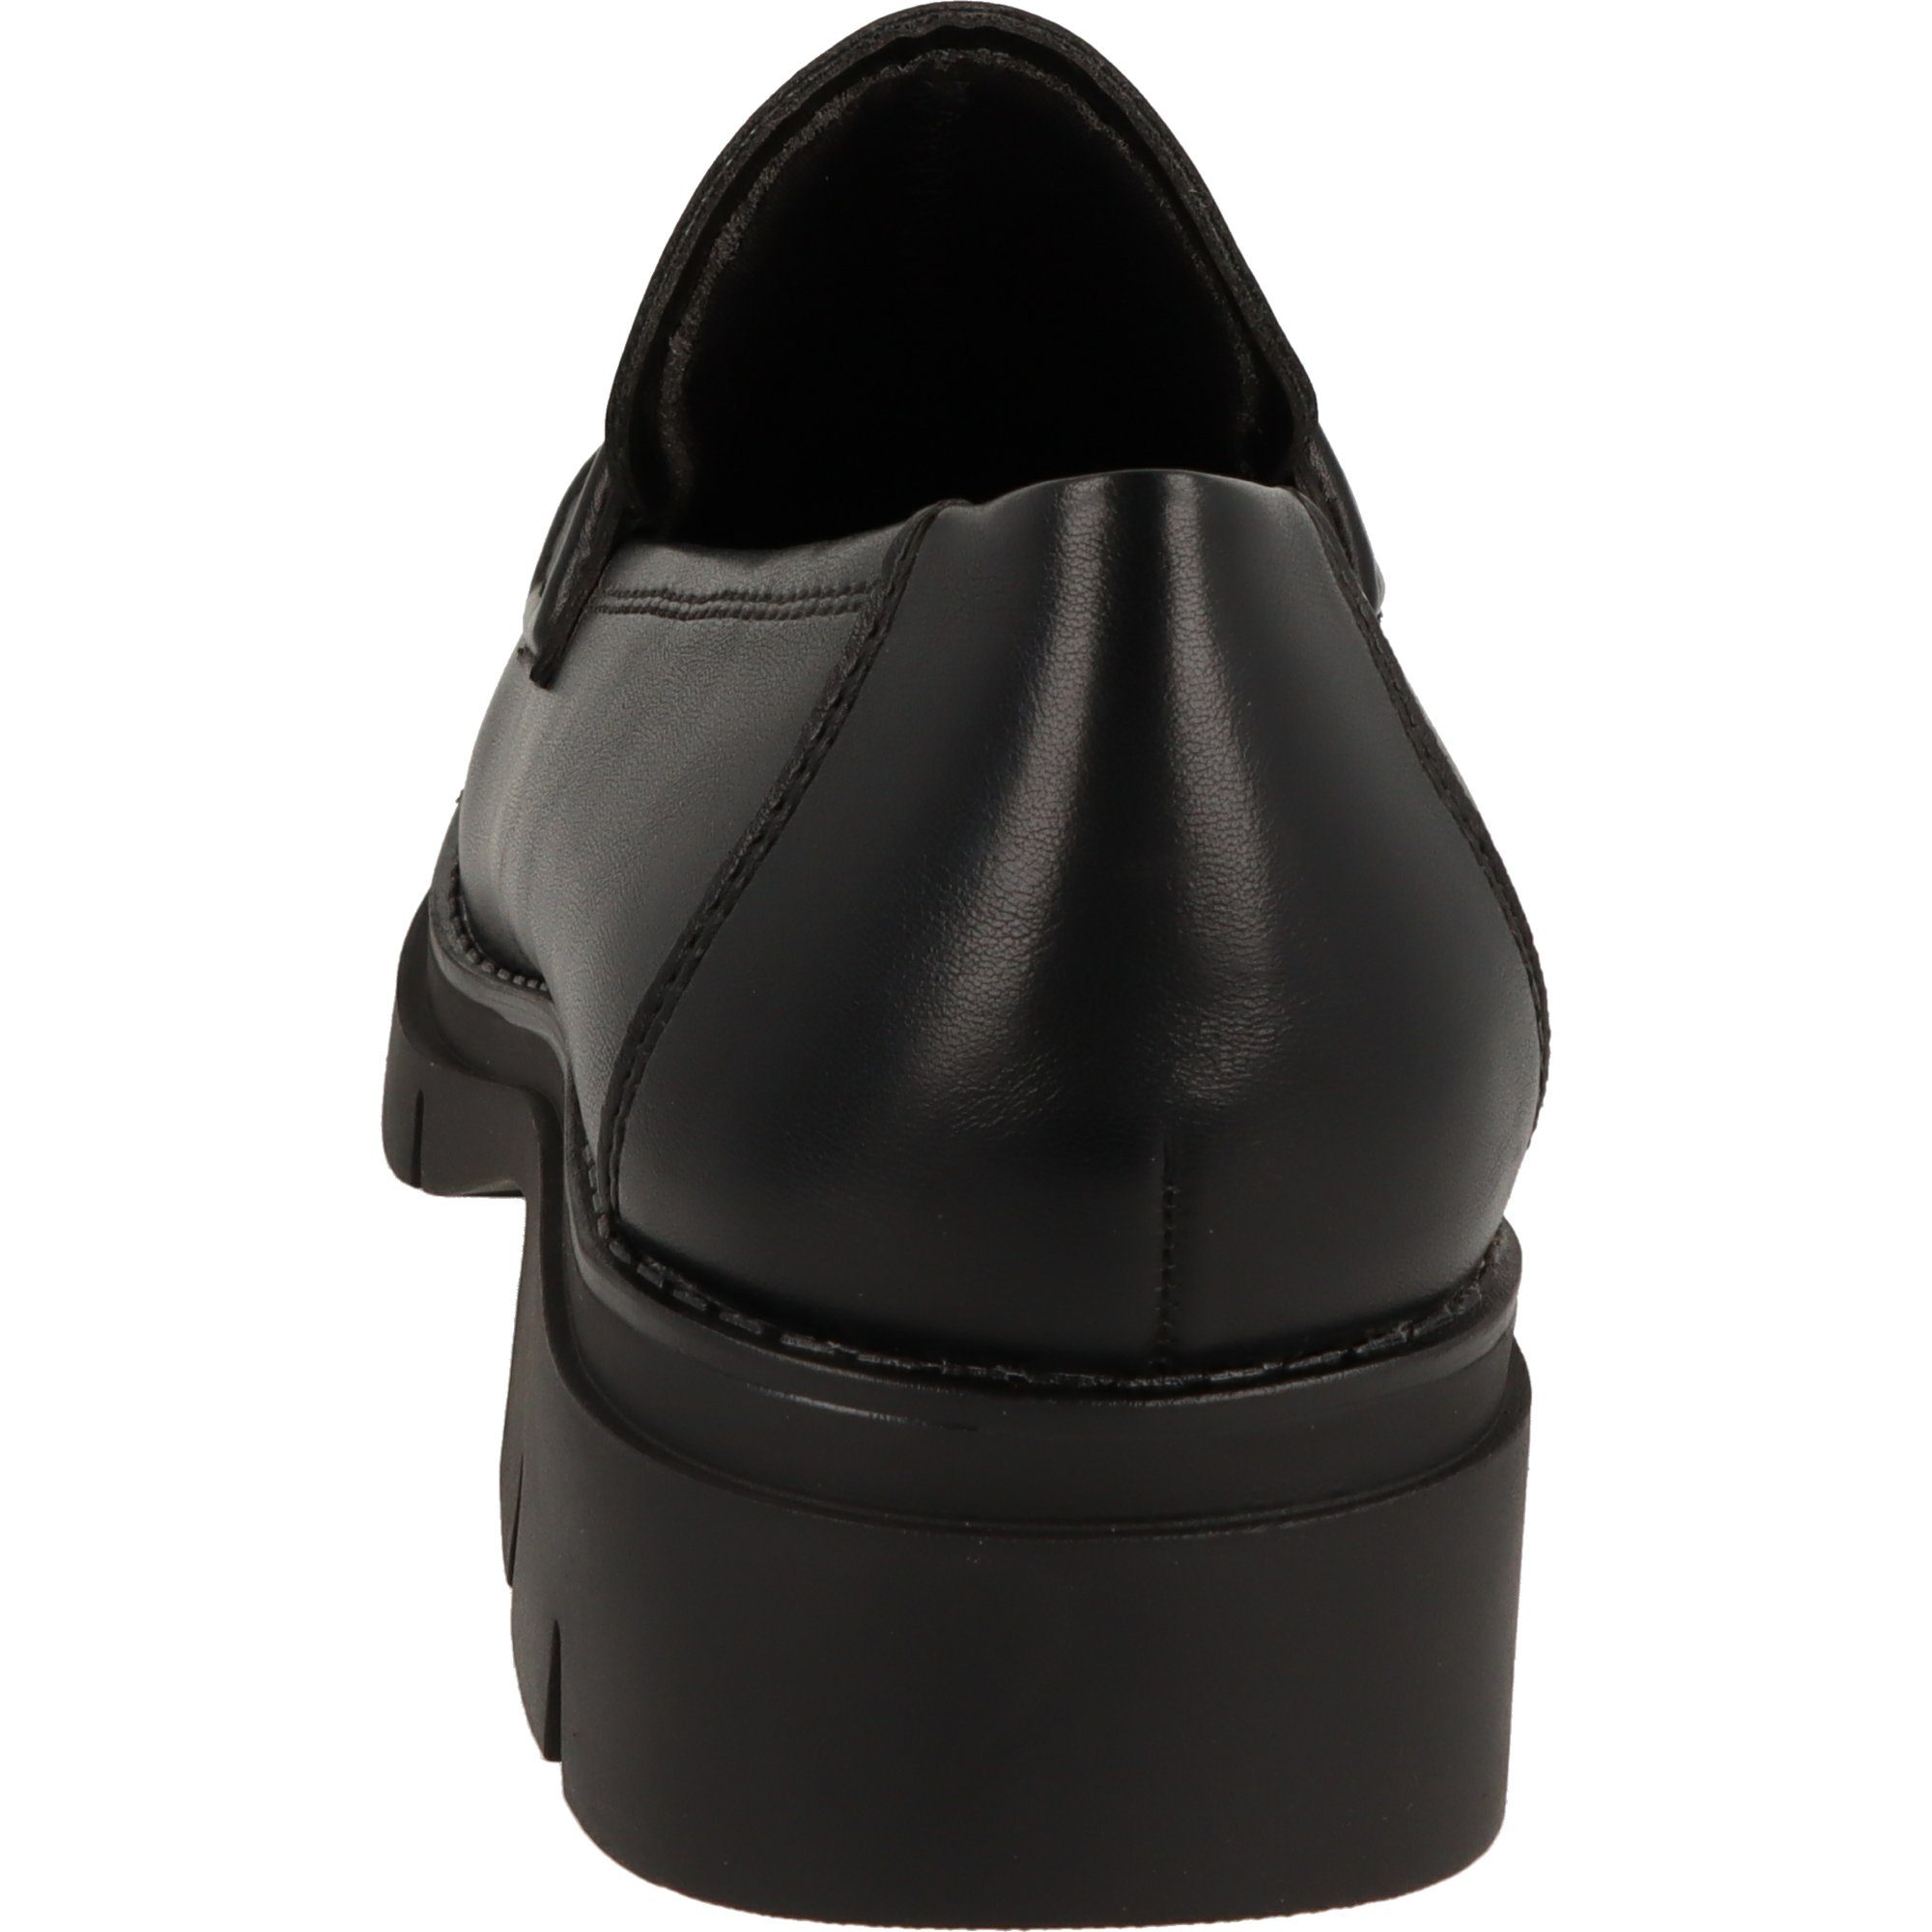 Tamaris Damen Schuhe Black Matt 1-24313-41 Halbschuhe Loafer Slipper Komfort Vegan